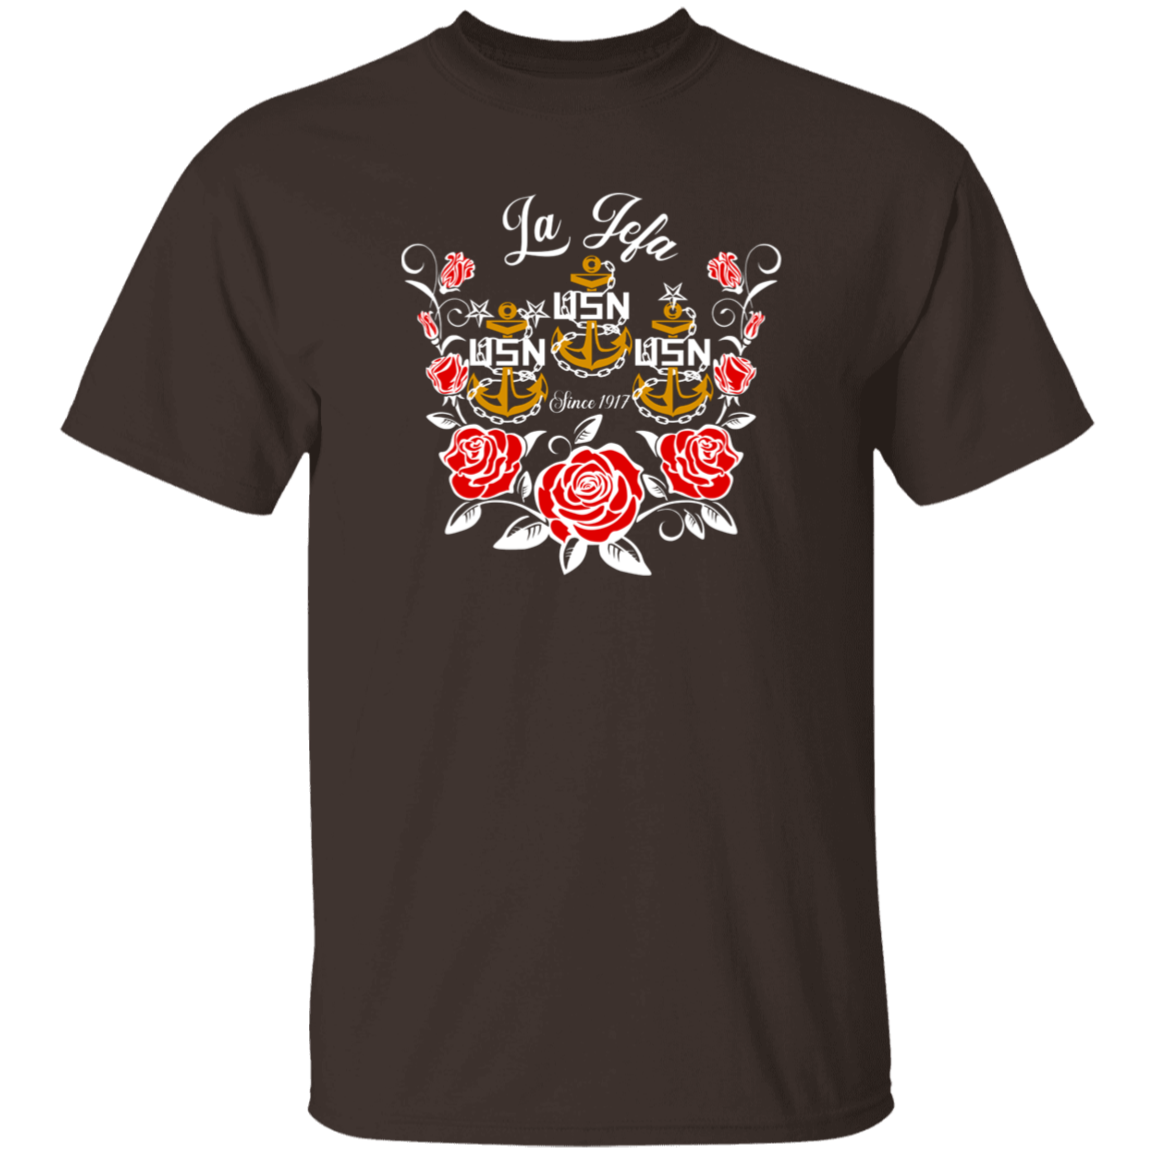 La Jefa Rose Gold 5.3 oz. T-Shirt